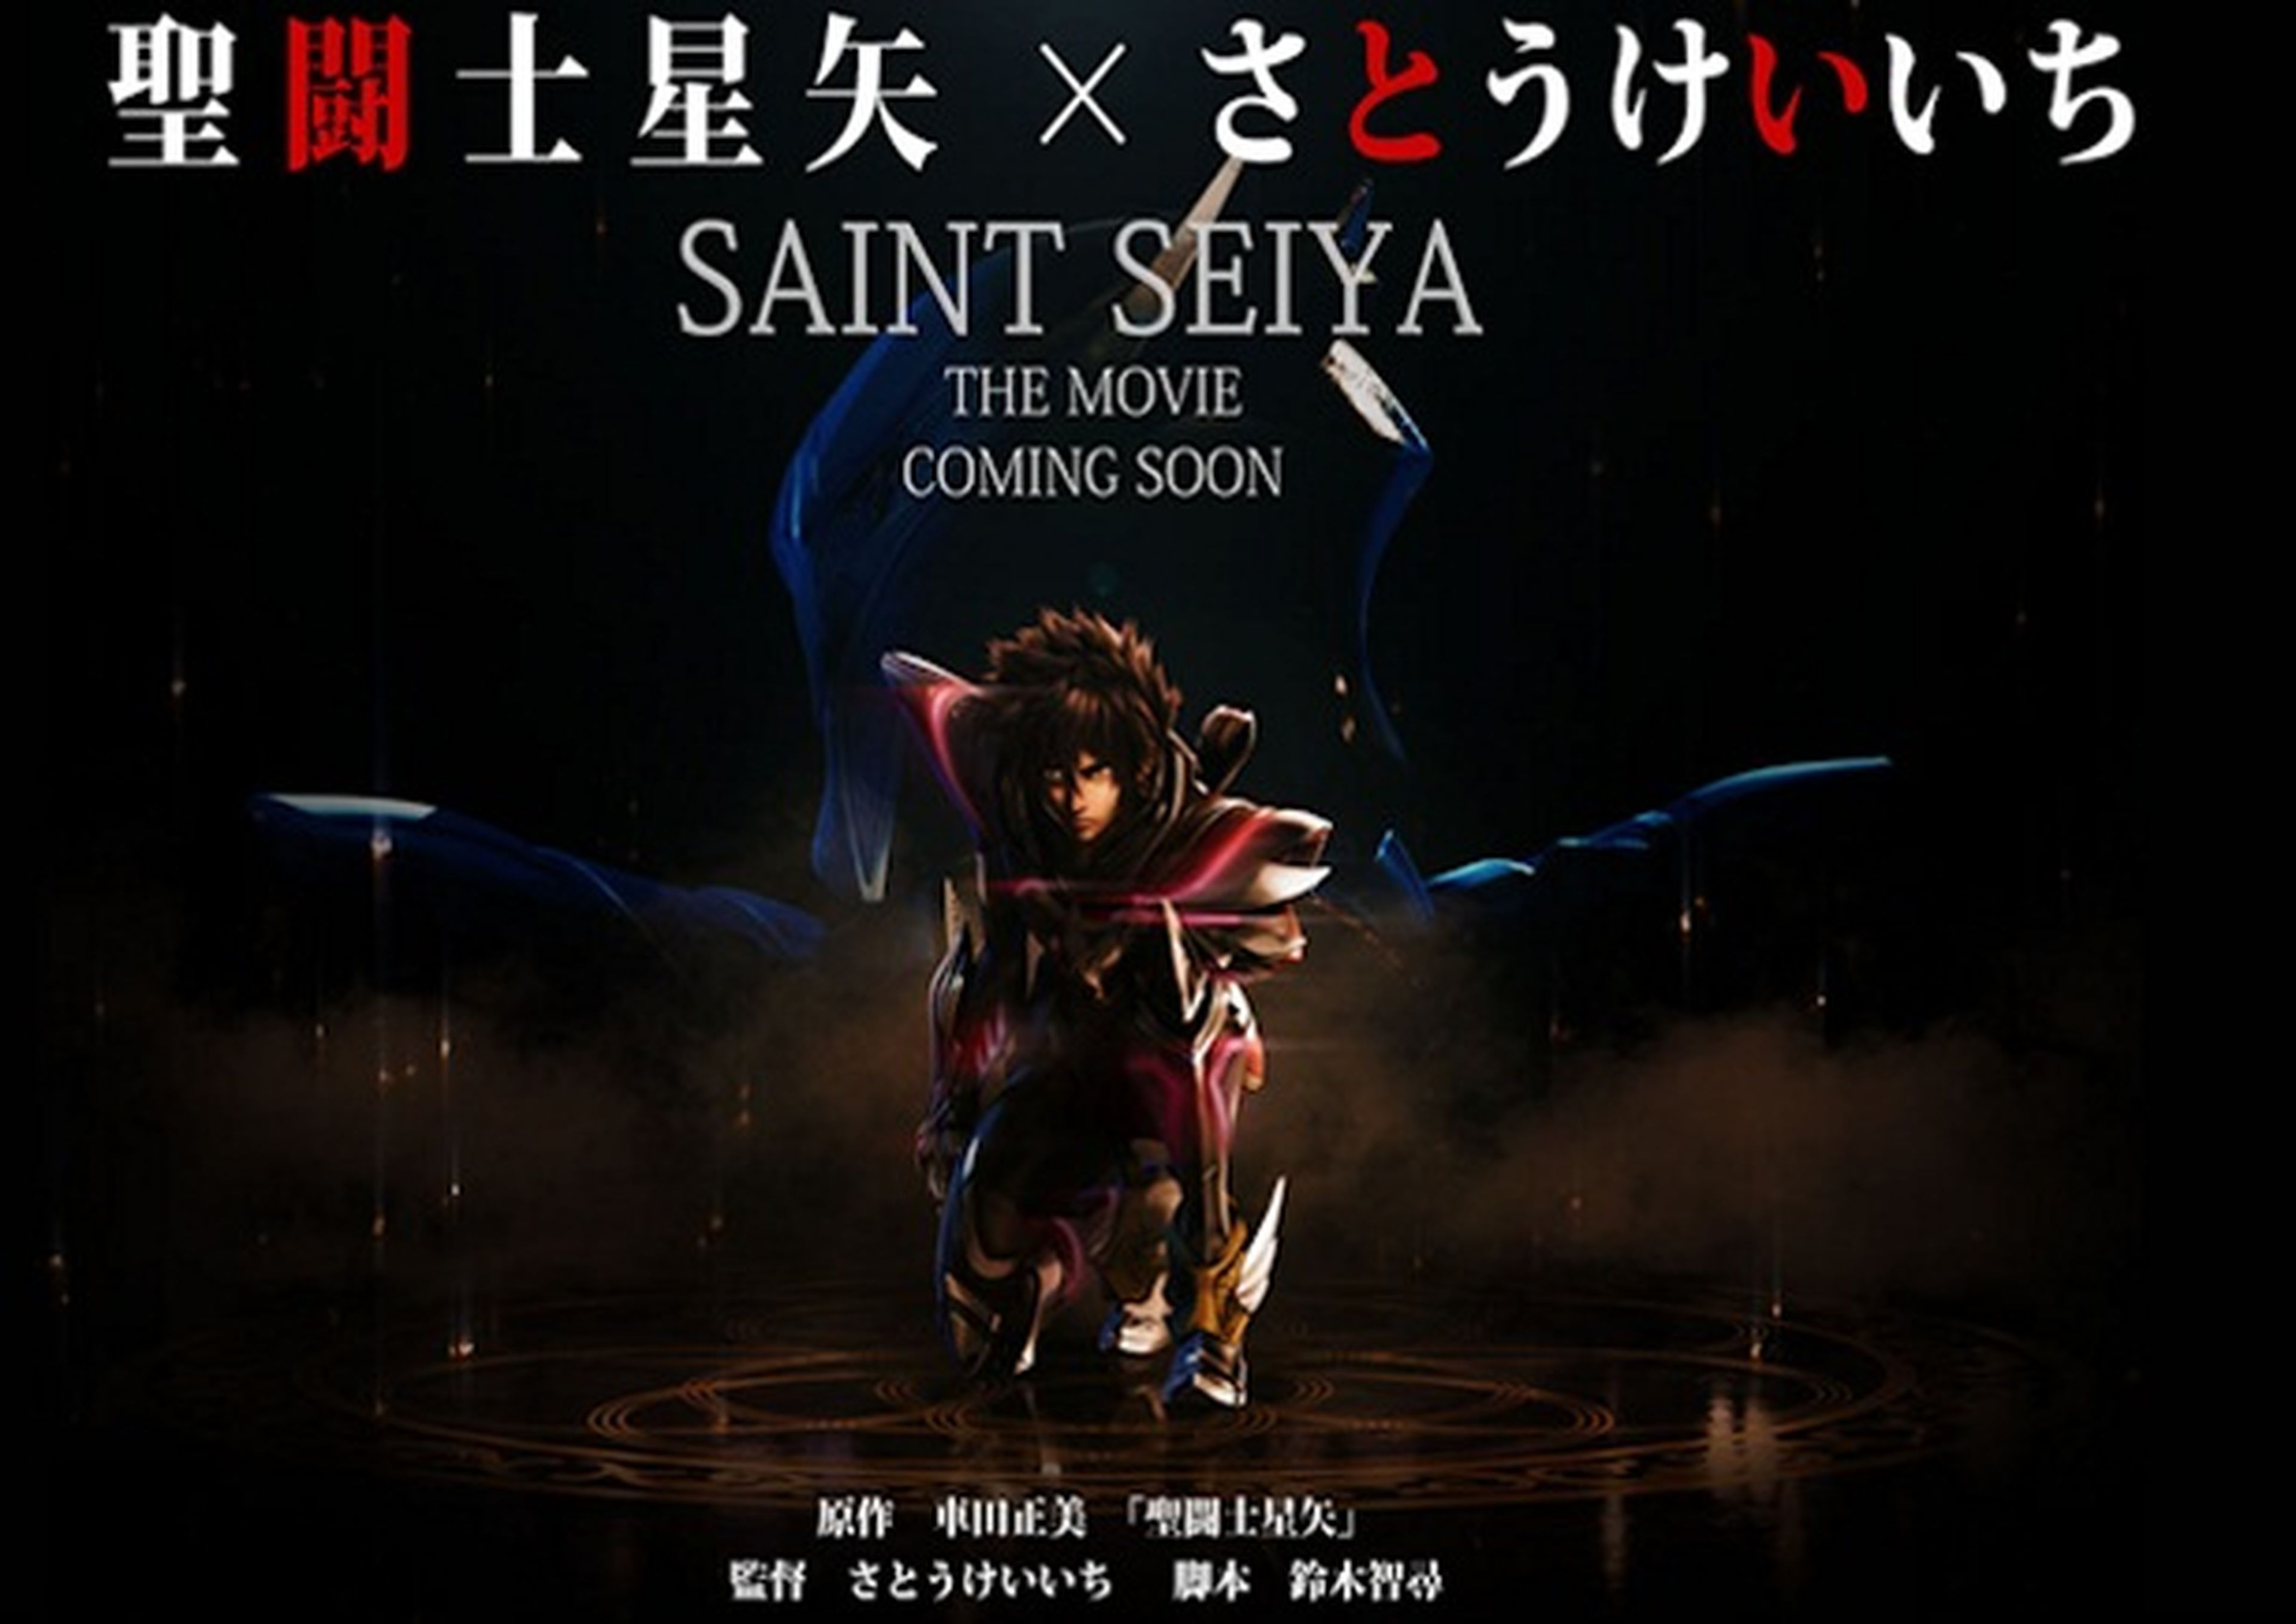 Detalles sobre Saint Seiya: la película